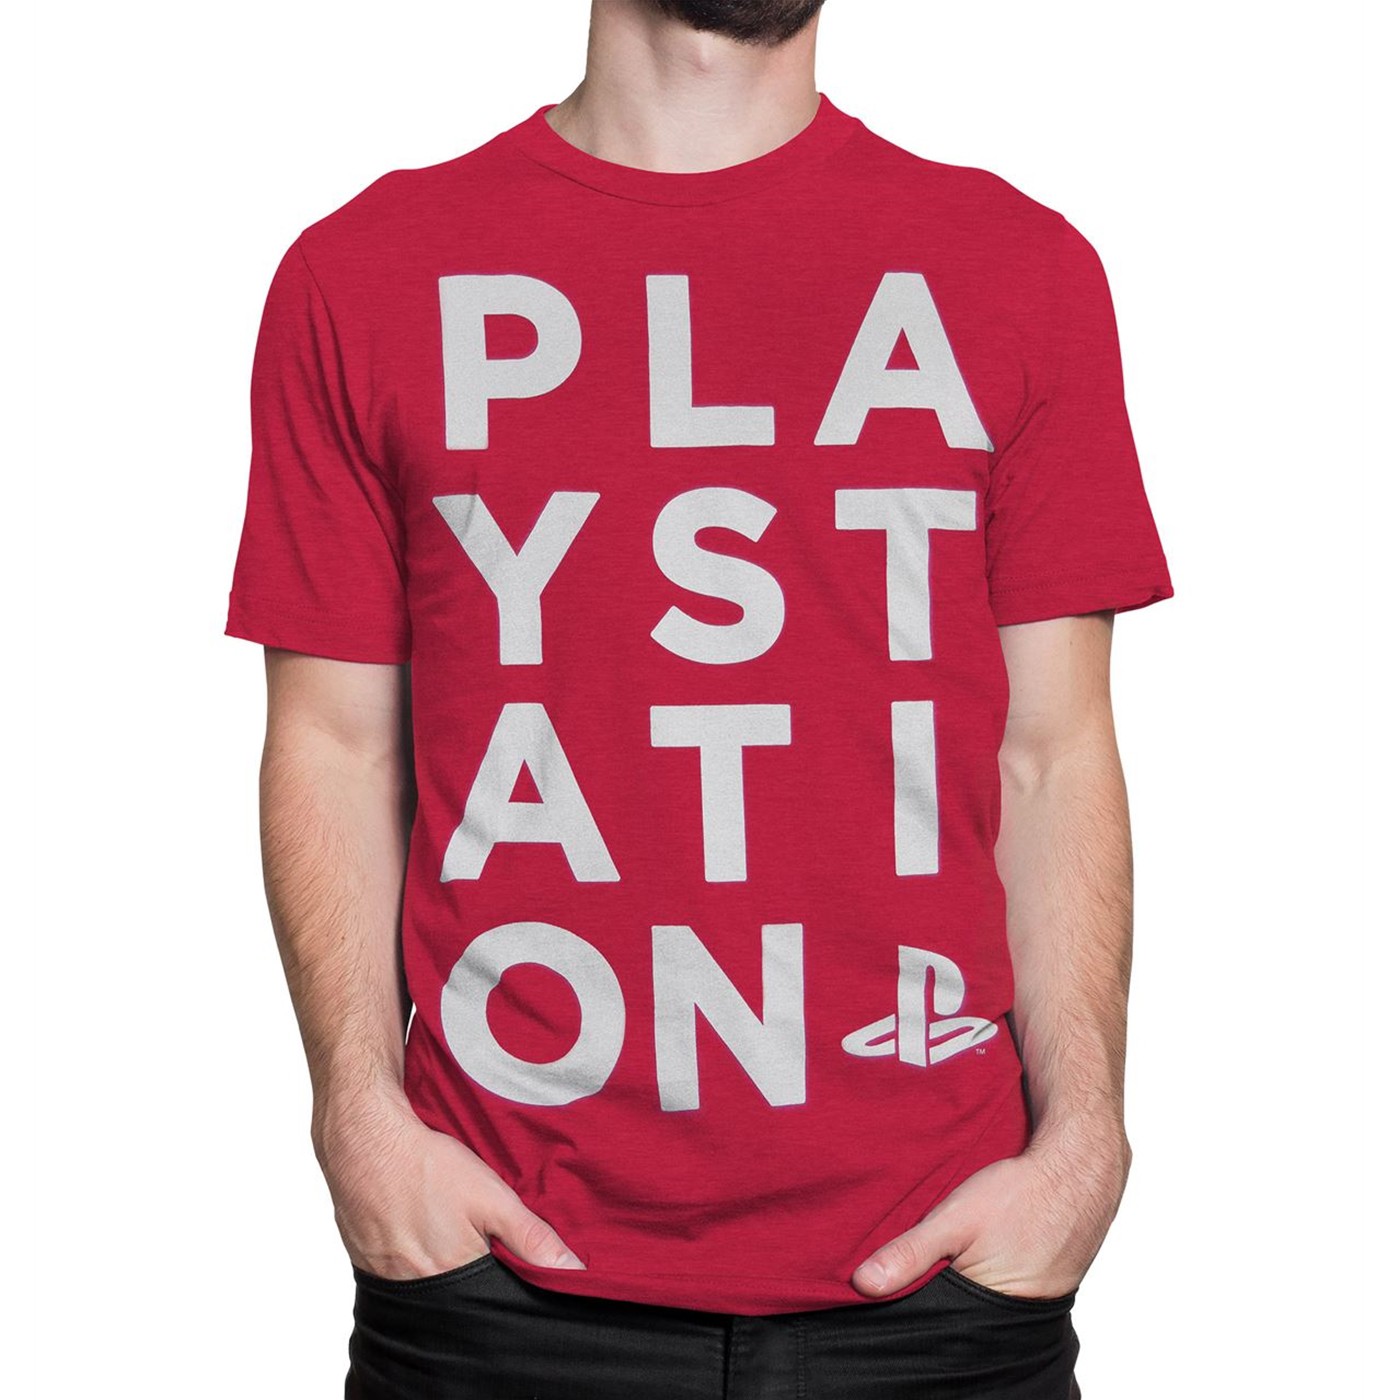 Playstation Logo Red Heather Men's T-Shirt